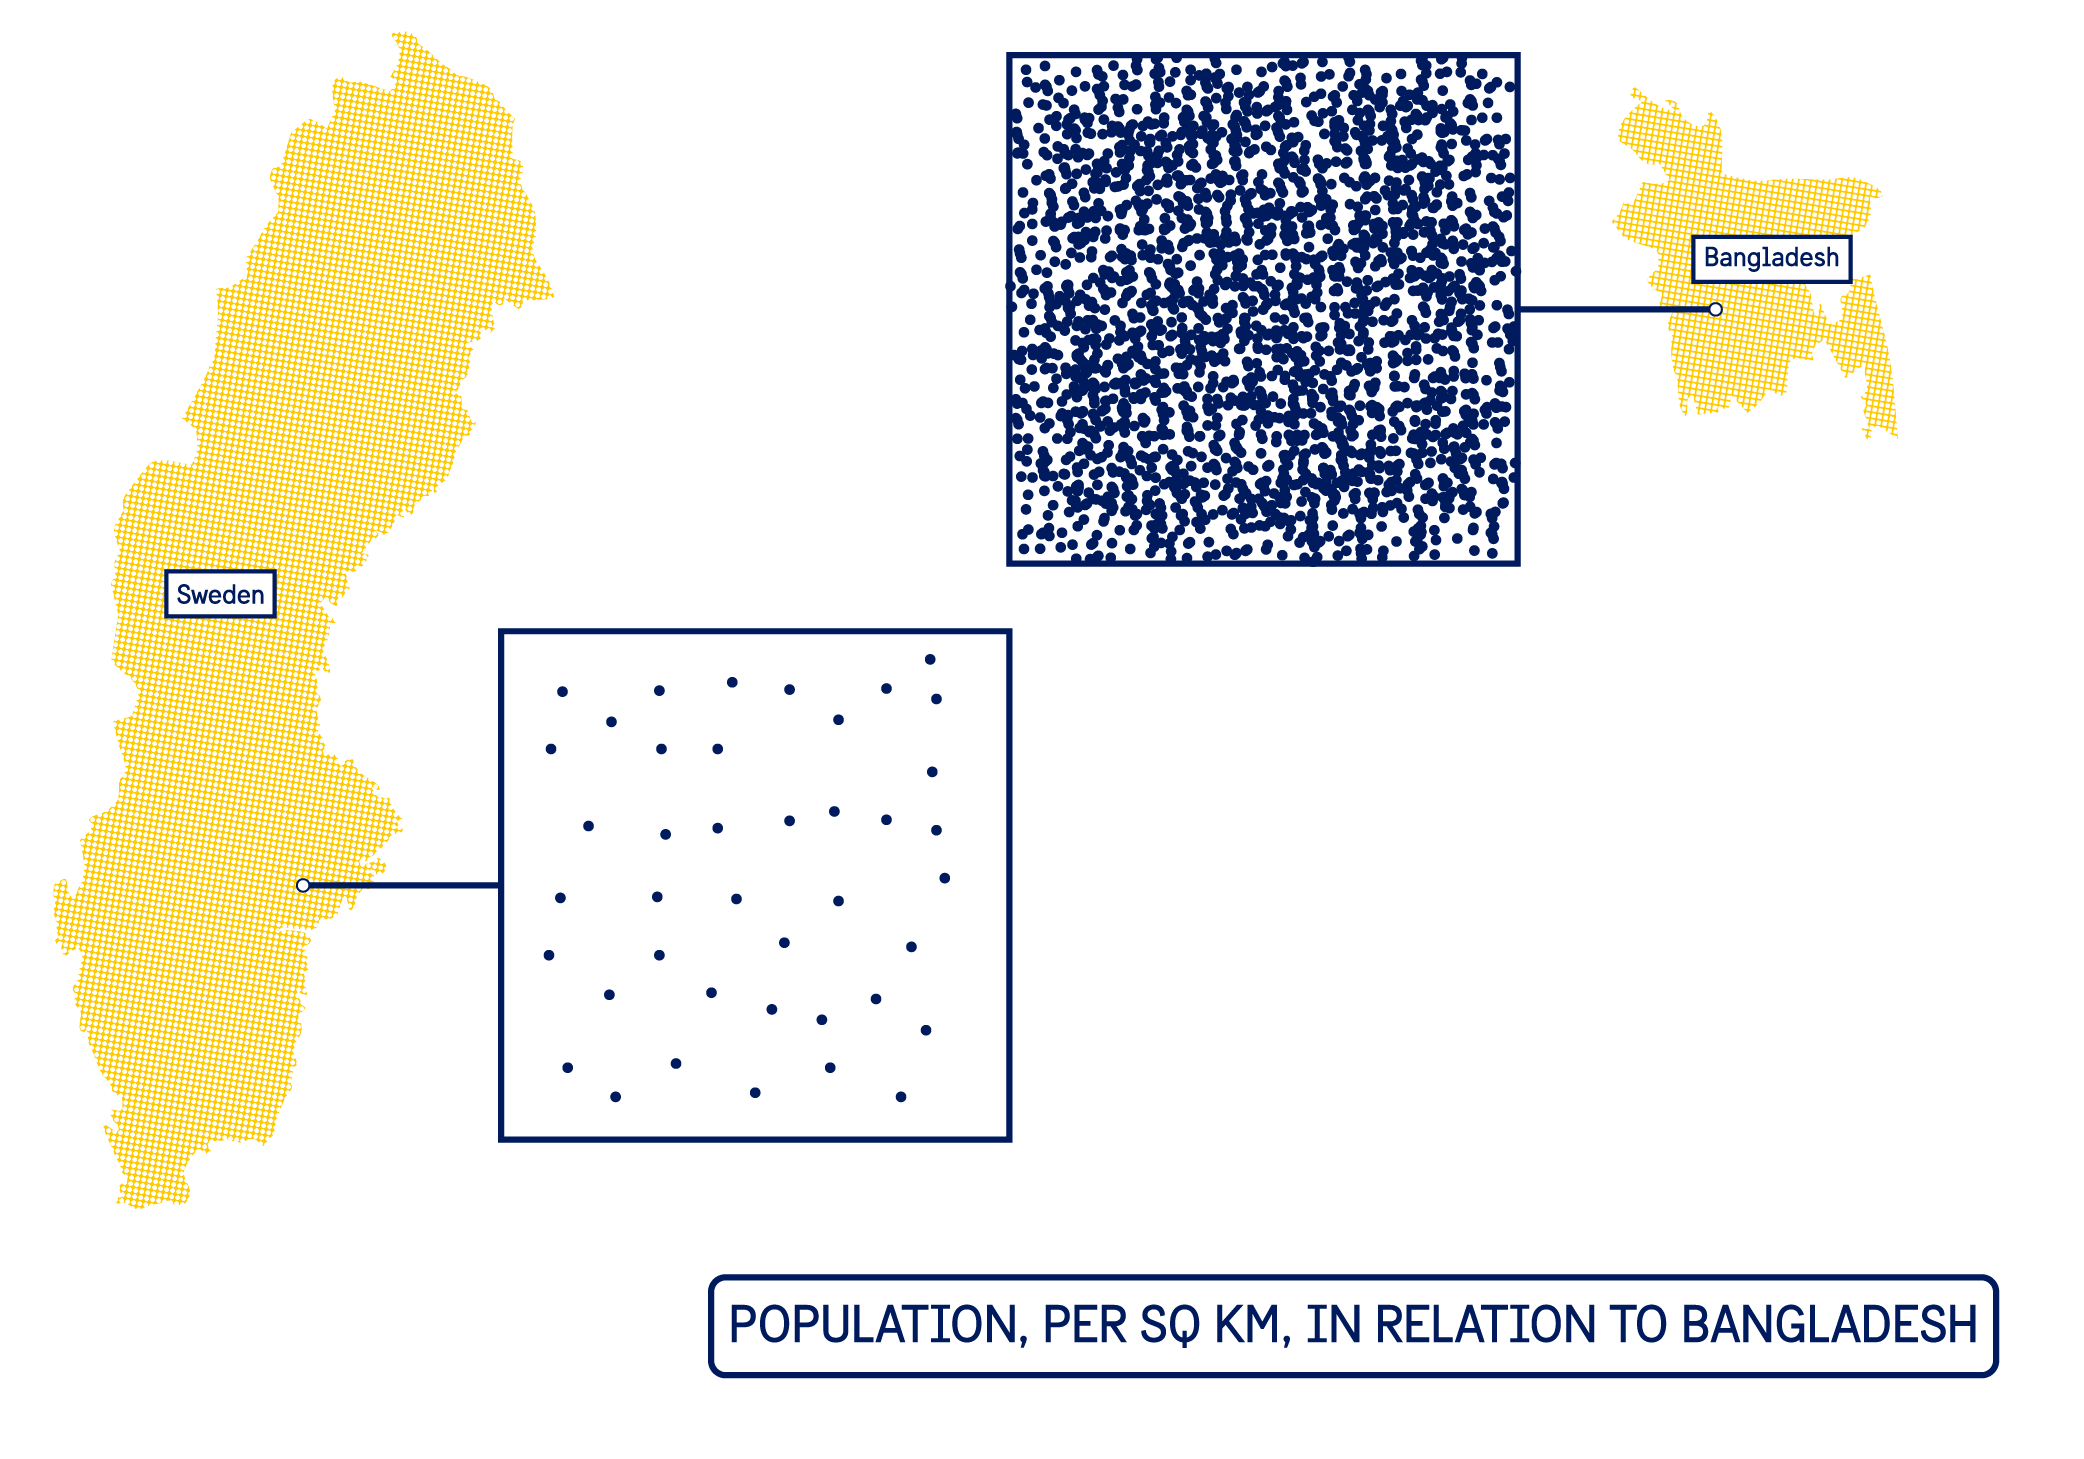 sweden's and bangladesh's population per km compared